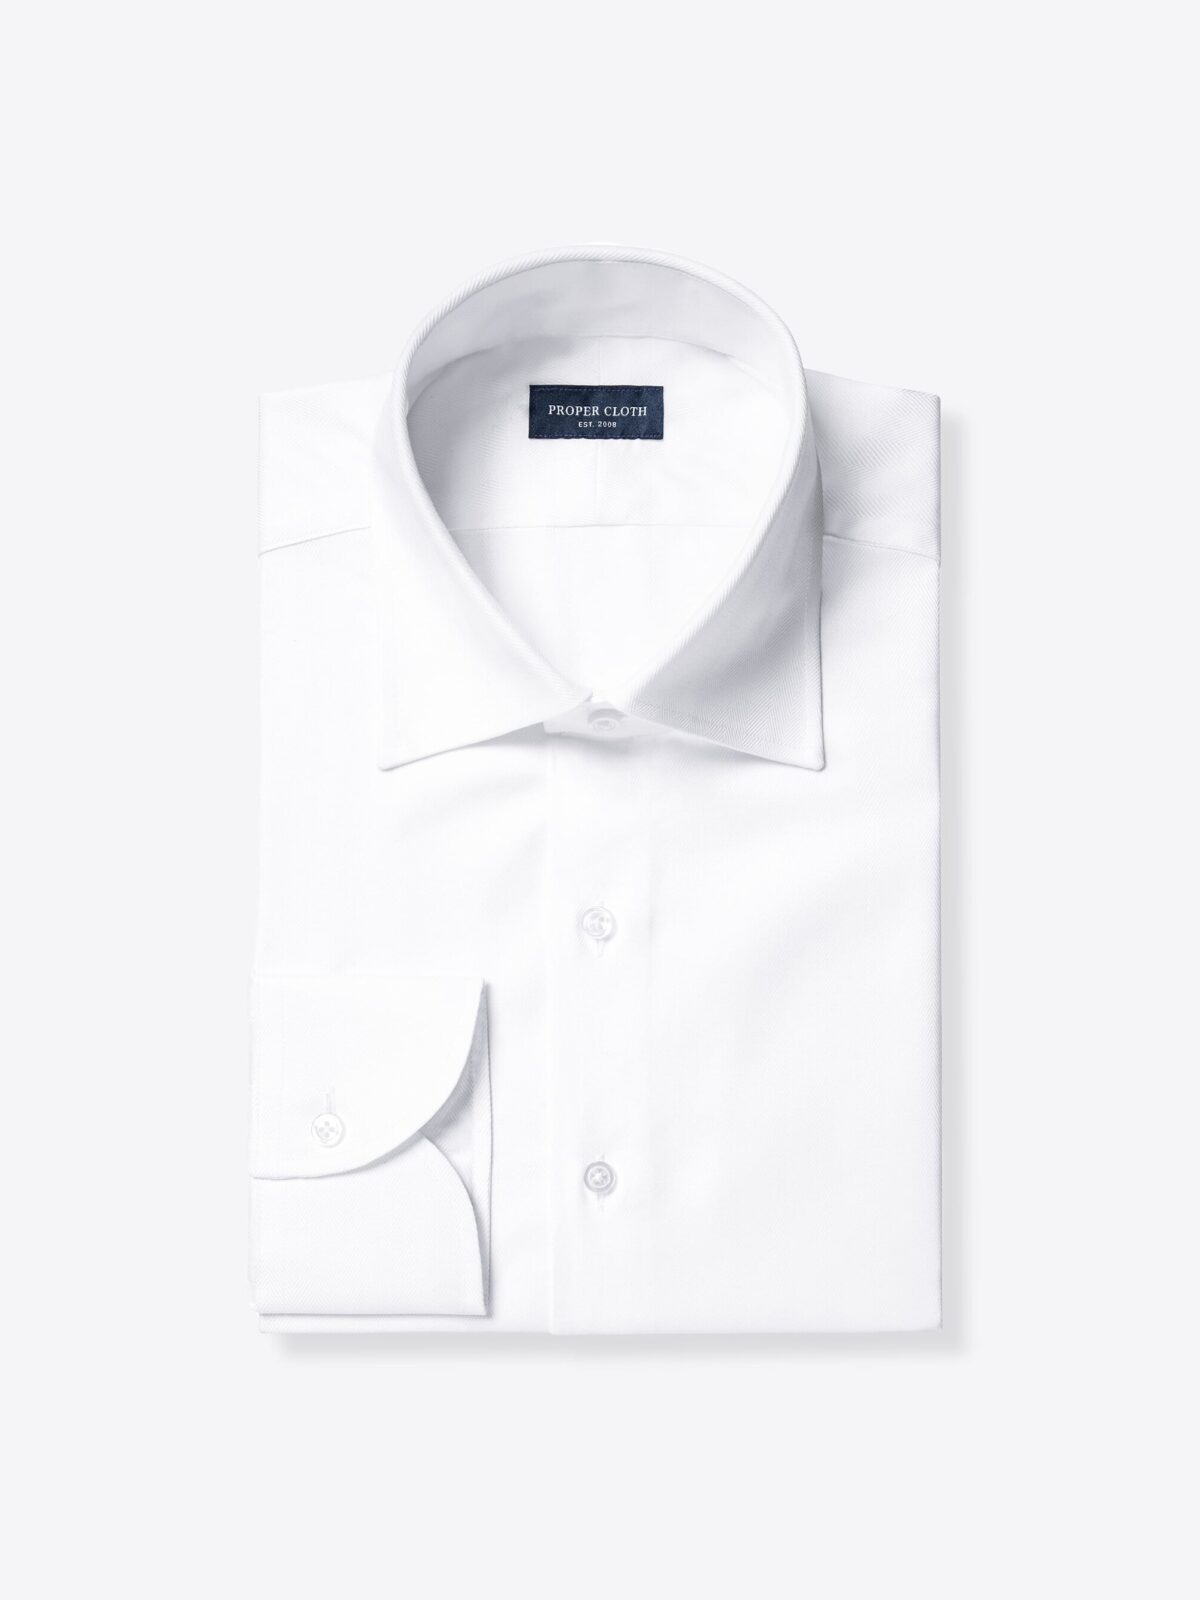 White Dress Shirts For Men Men'S Short Sleeved Cotton Linen Summer Shirt  With Chest Pocket Tops Blouse 